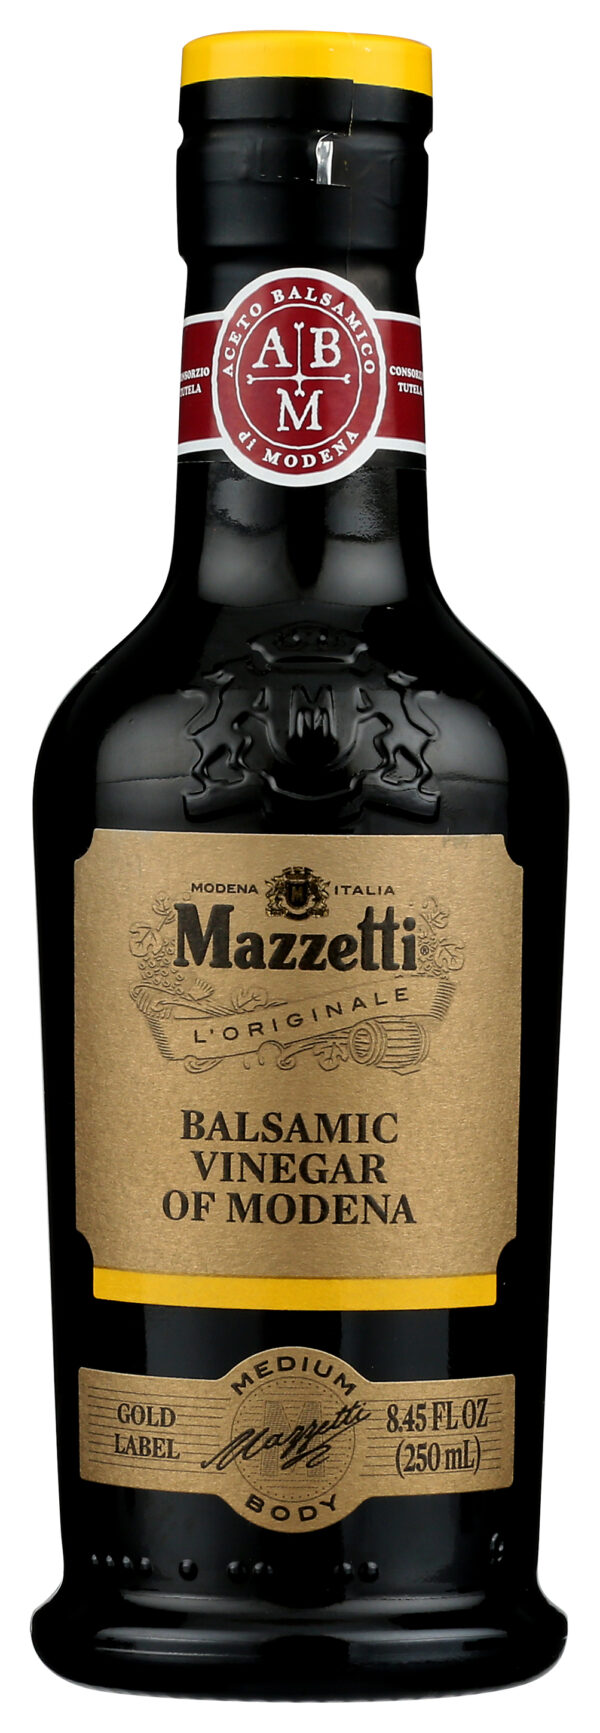 Balsamic Vinegar of Modena – 4 Leaf Gold Label Signature Series